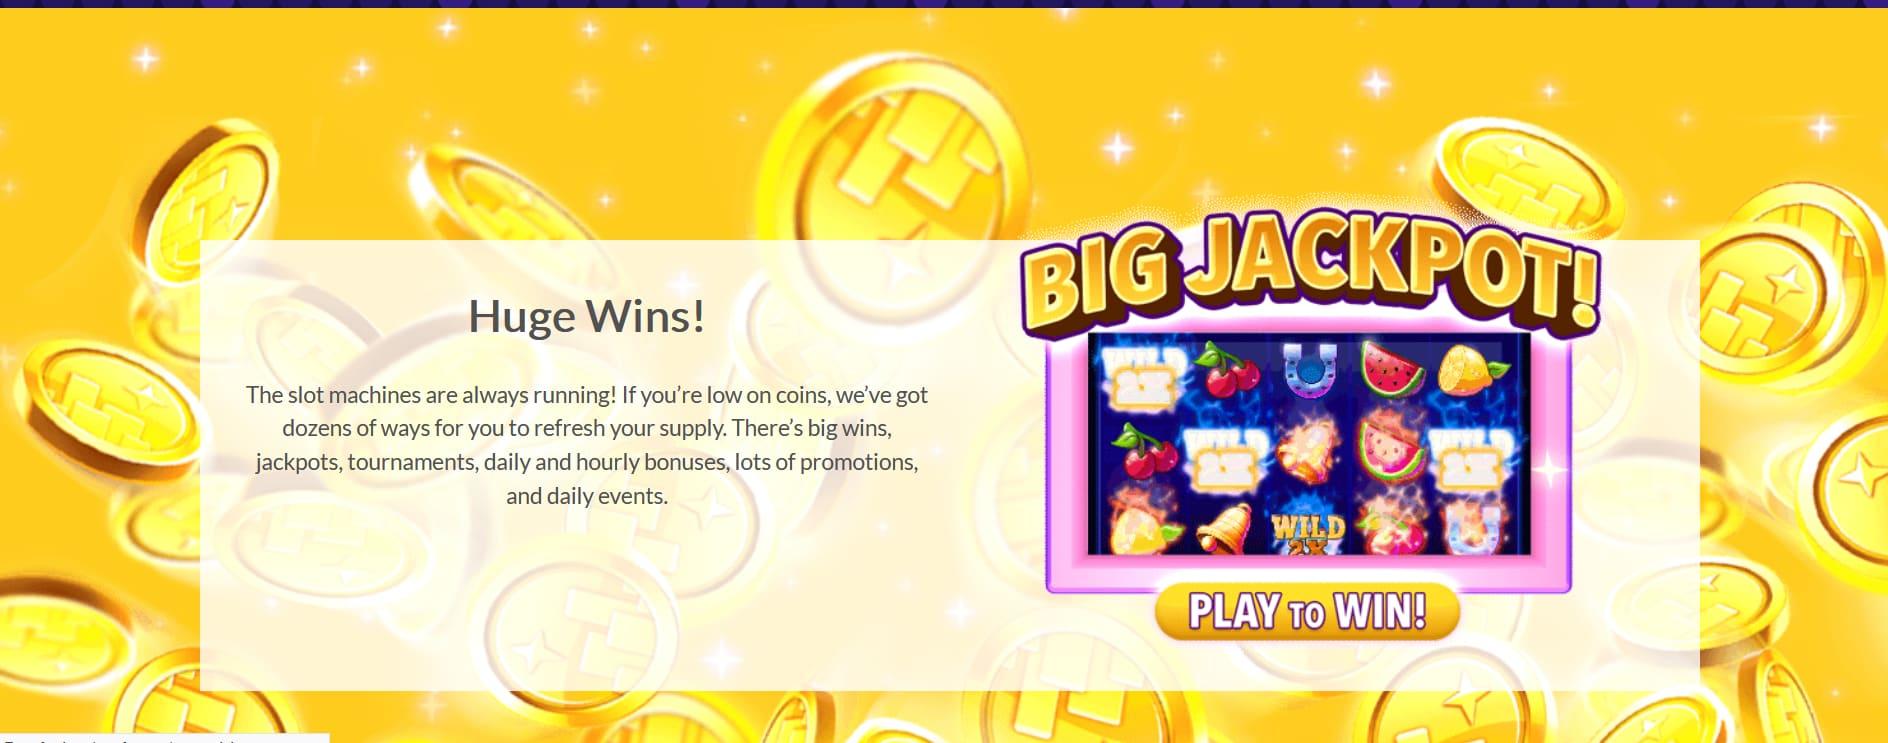 Heart of Vegas is a free online slots gaming platform